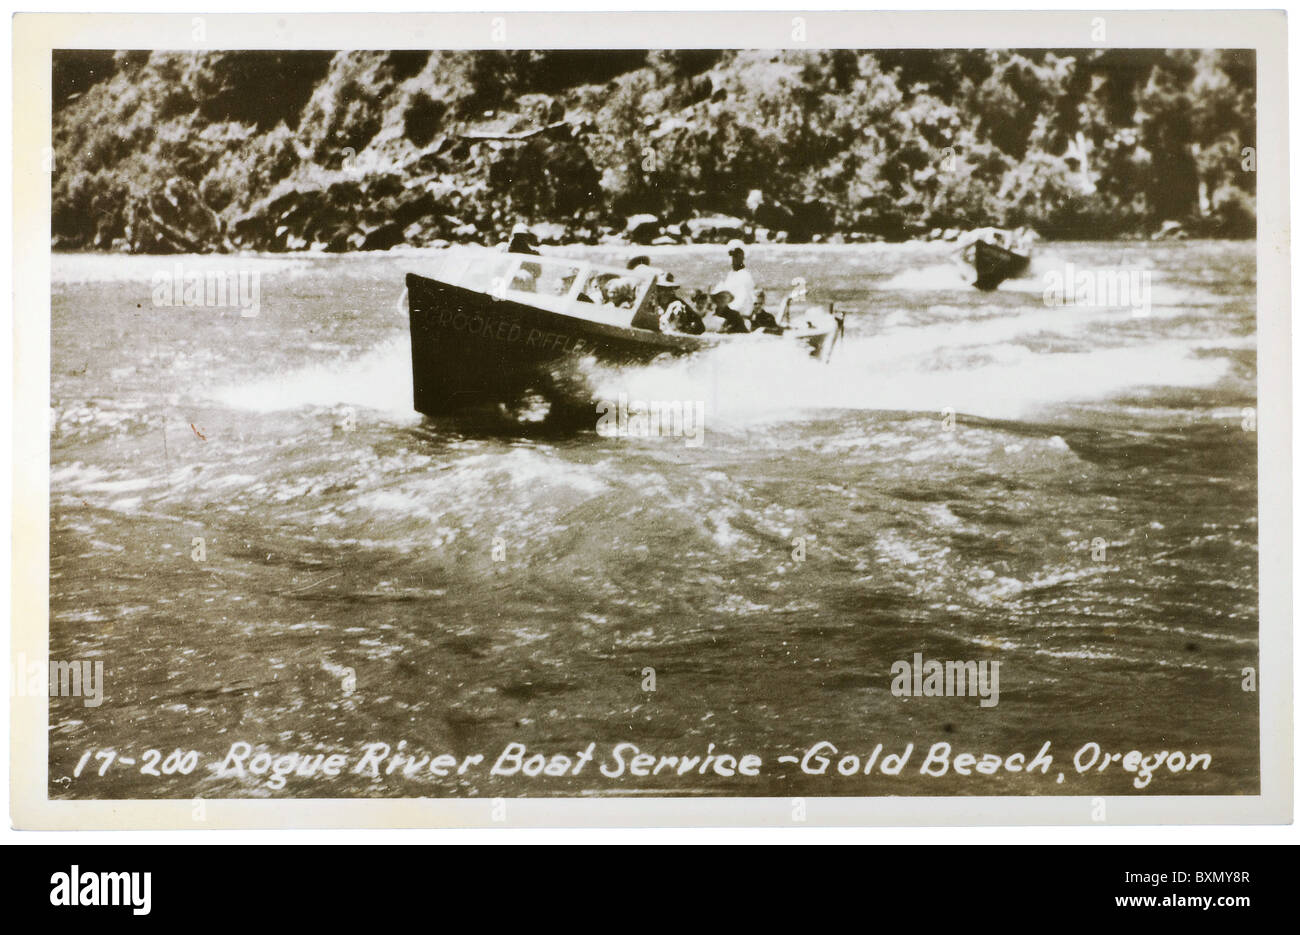 Rogue River Boat Service - Gold Beach, Oregon Stock Photo